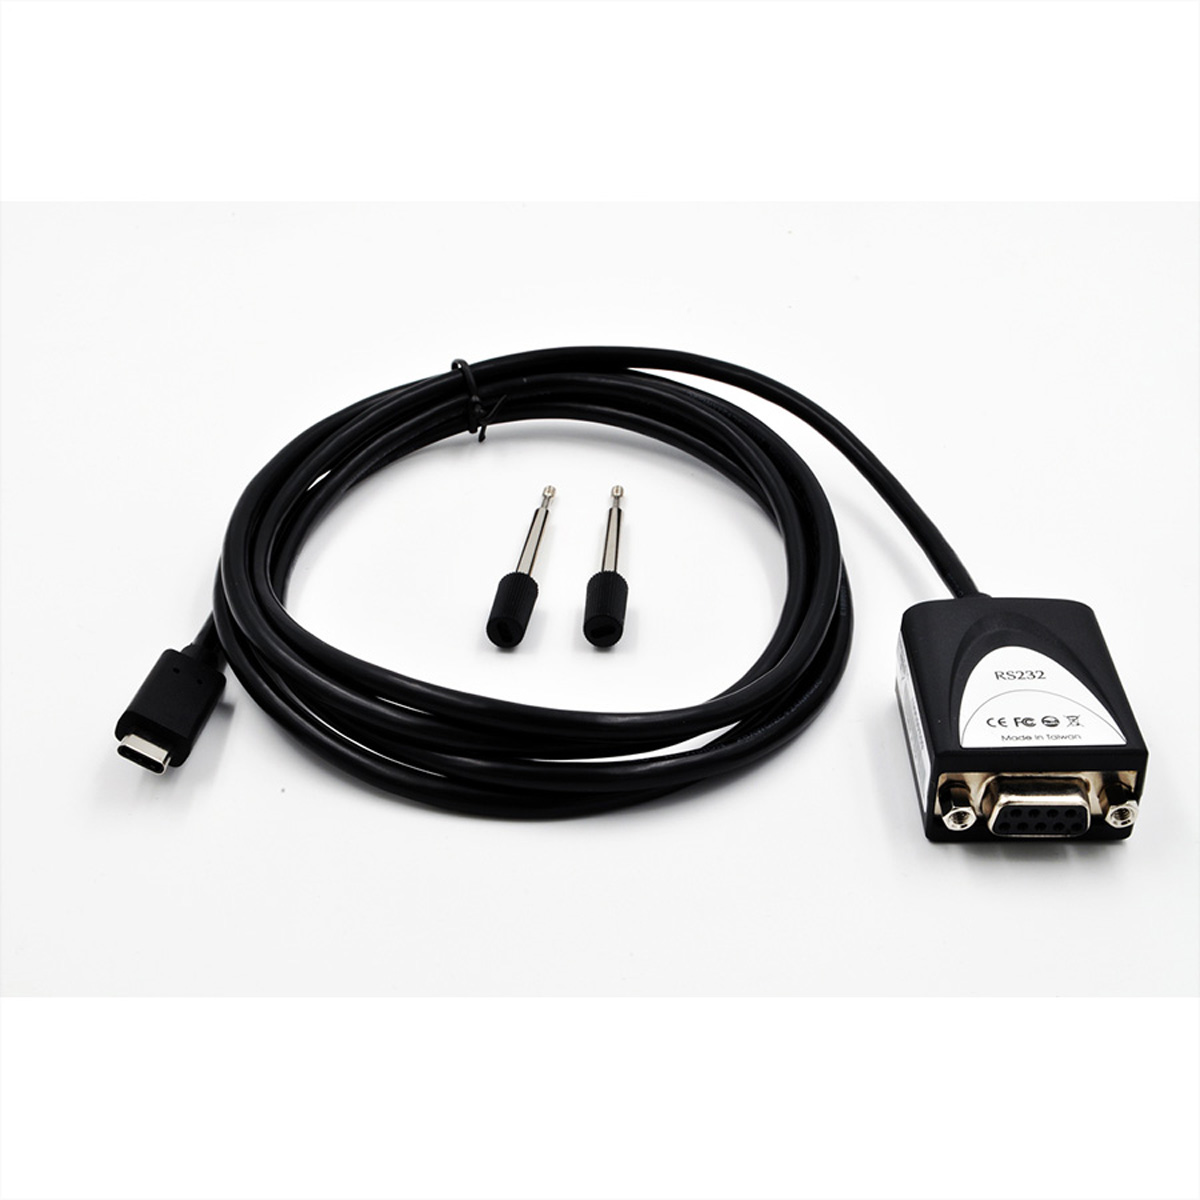 EXSYS EX-2311-2F USB 2.0 C - Stecker zu 1 x Seriell RS-232 1.8 Meter Kabel mit 9